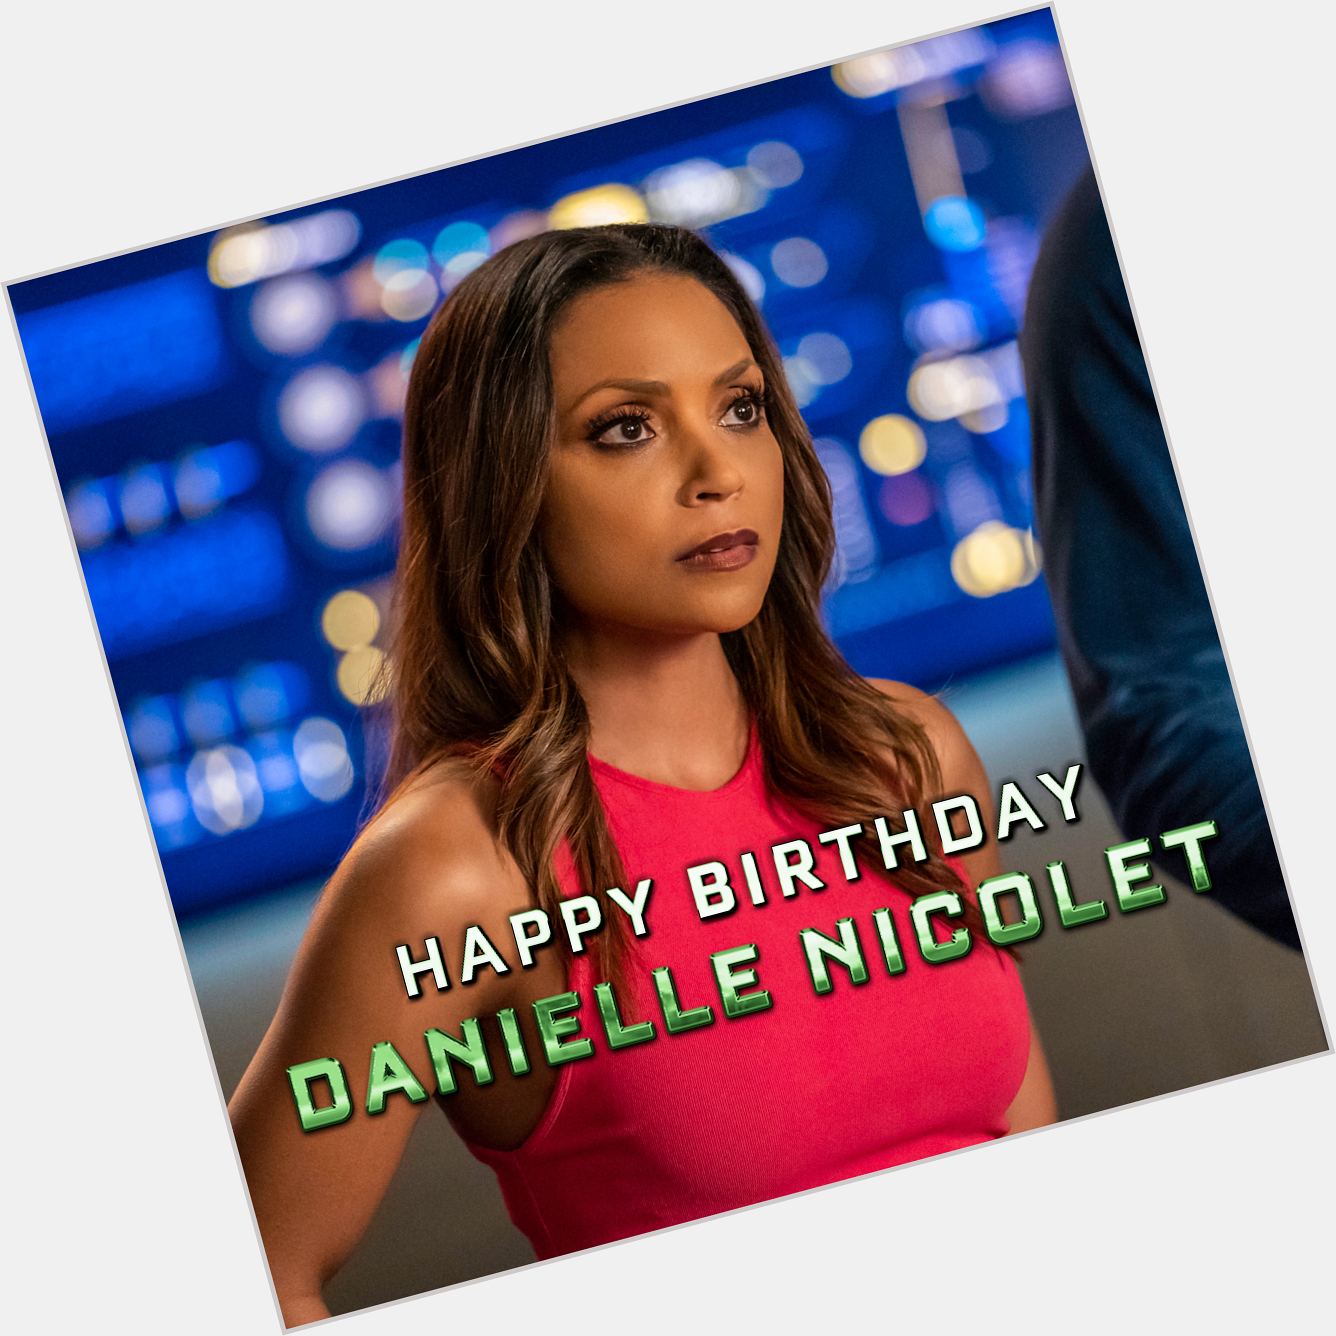 We\ve got more to celebrate. Happy birthday, Danielle Nicolet  